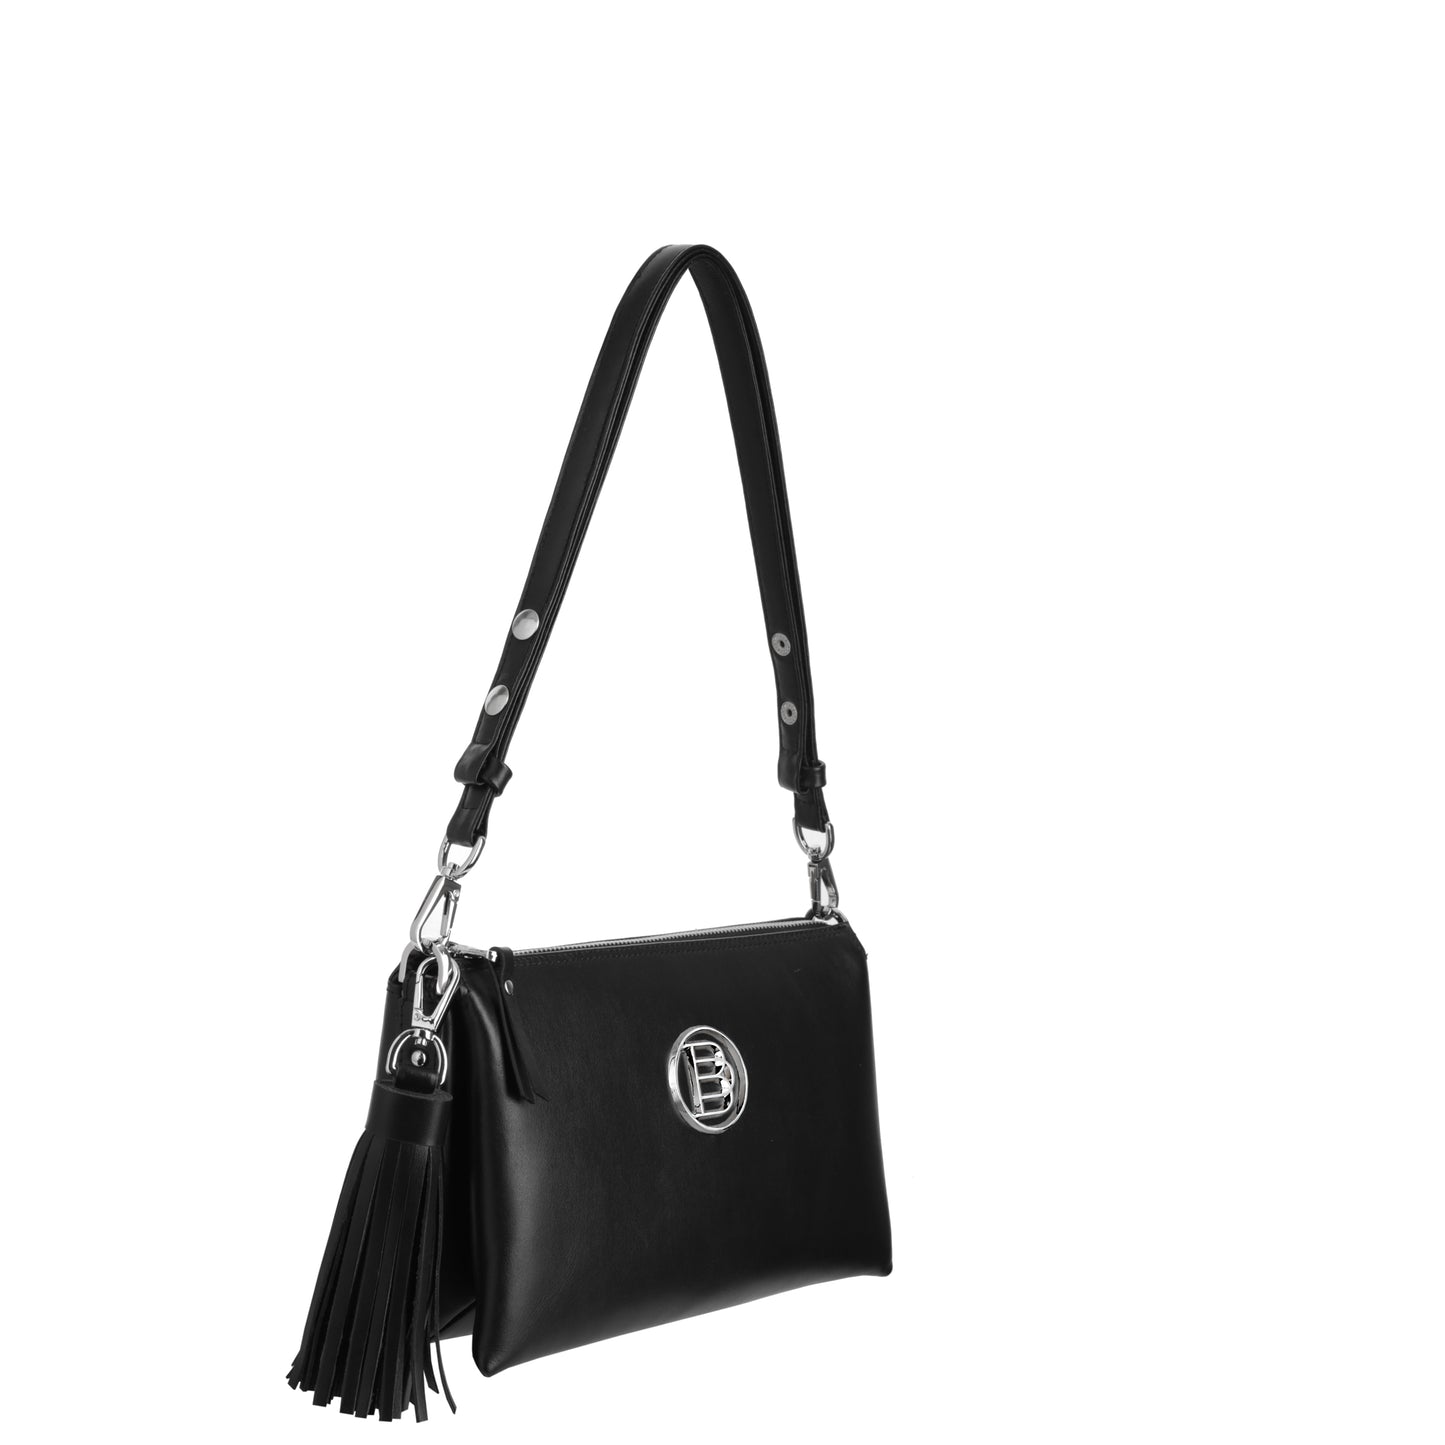 ELISE NAPA BLACK women's leather handbag